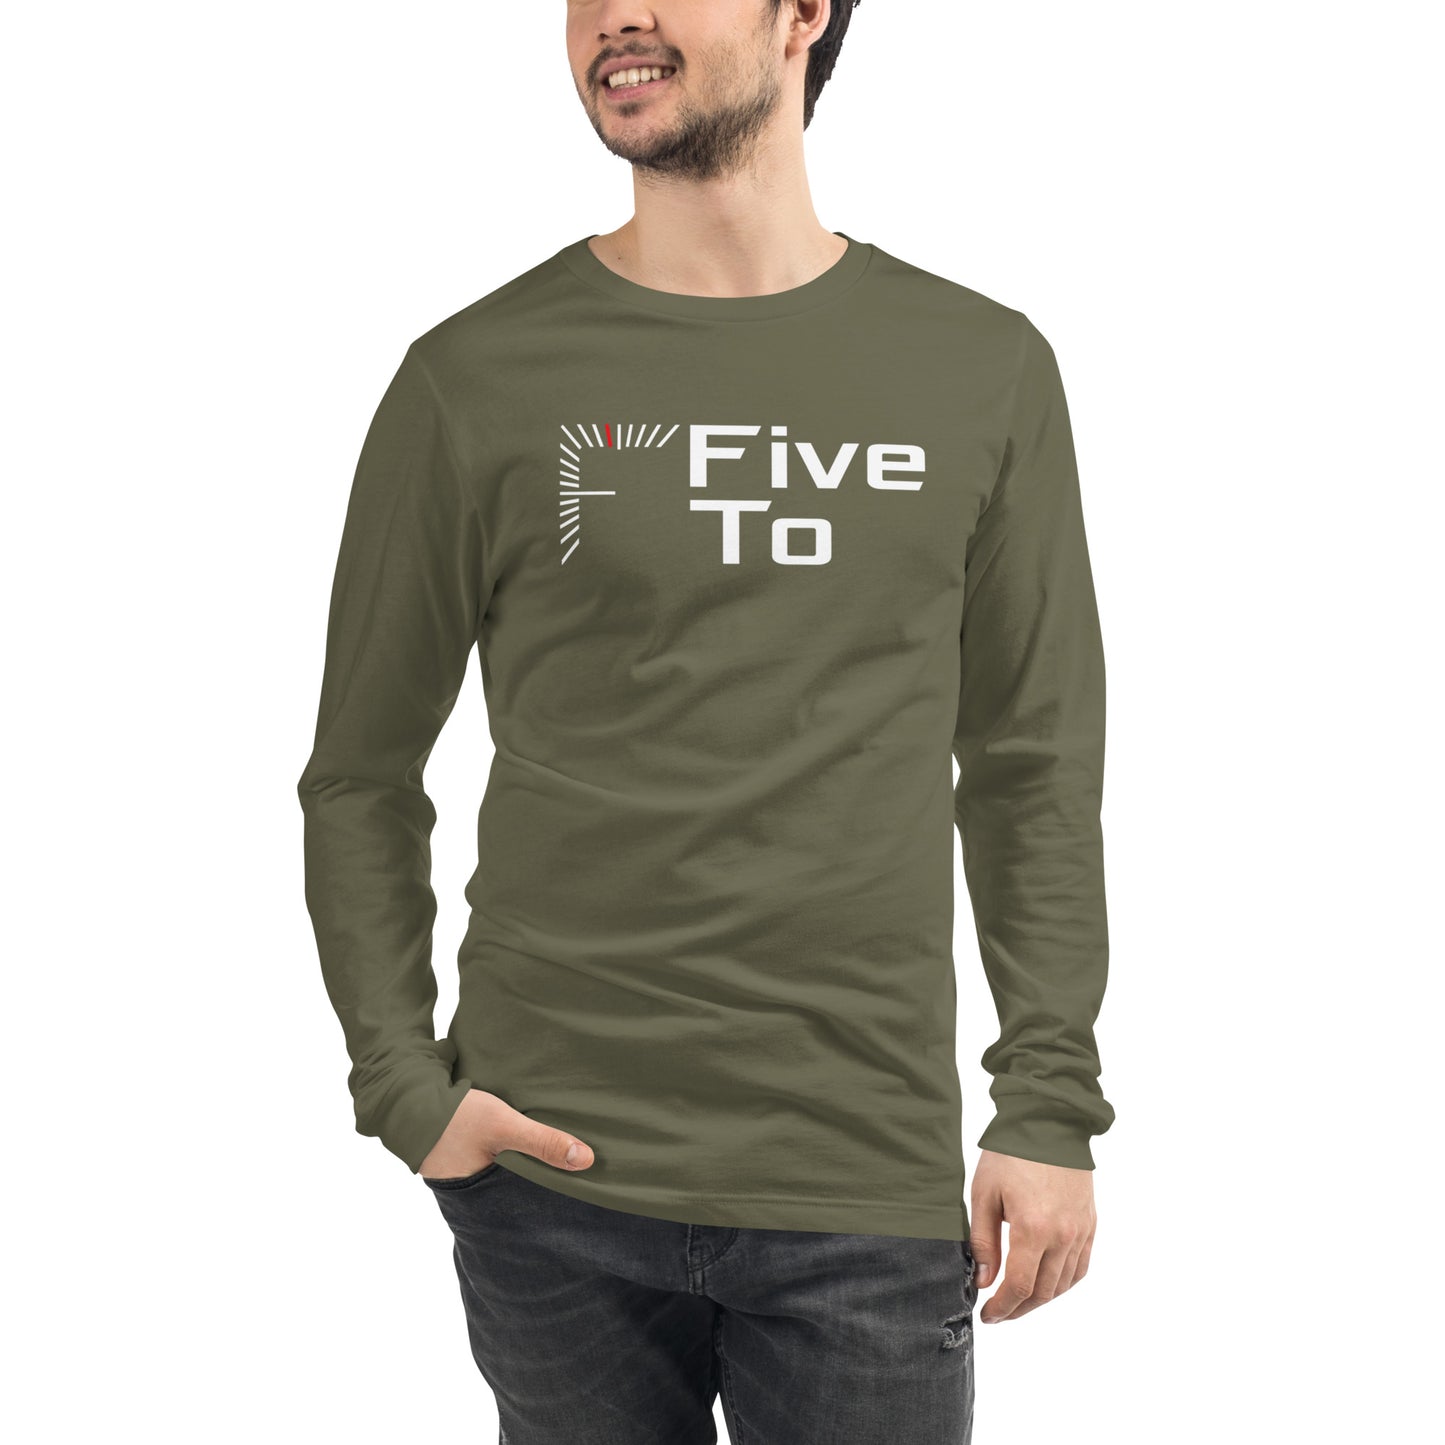 FiveTo Unisex Long Sleeve T-shirt